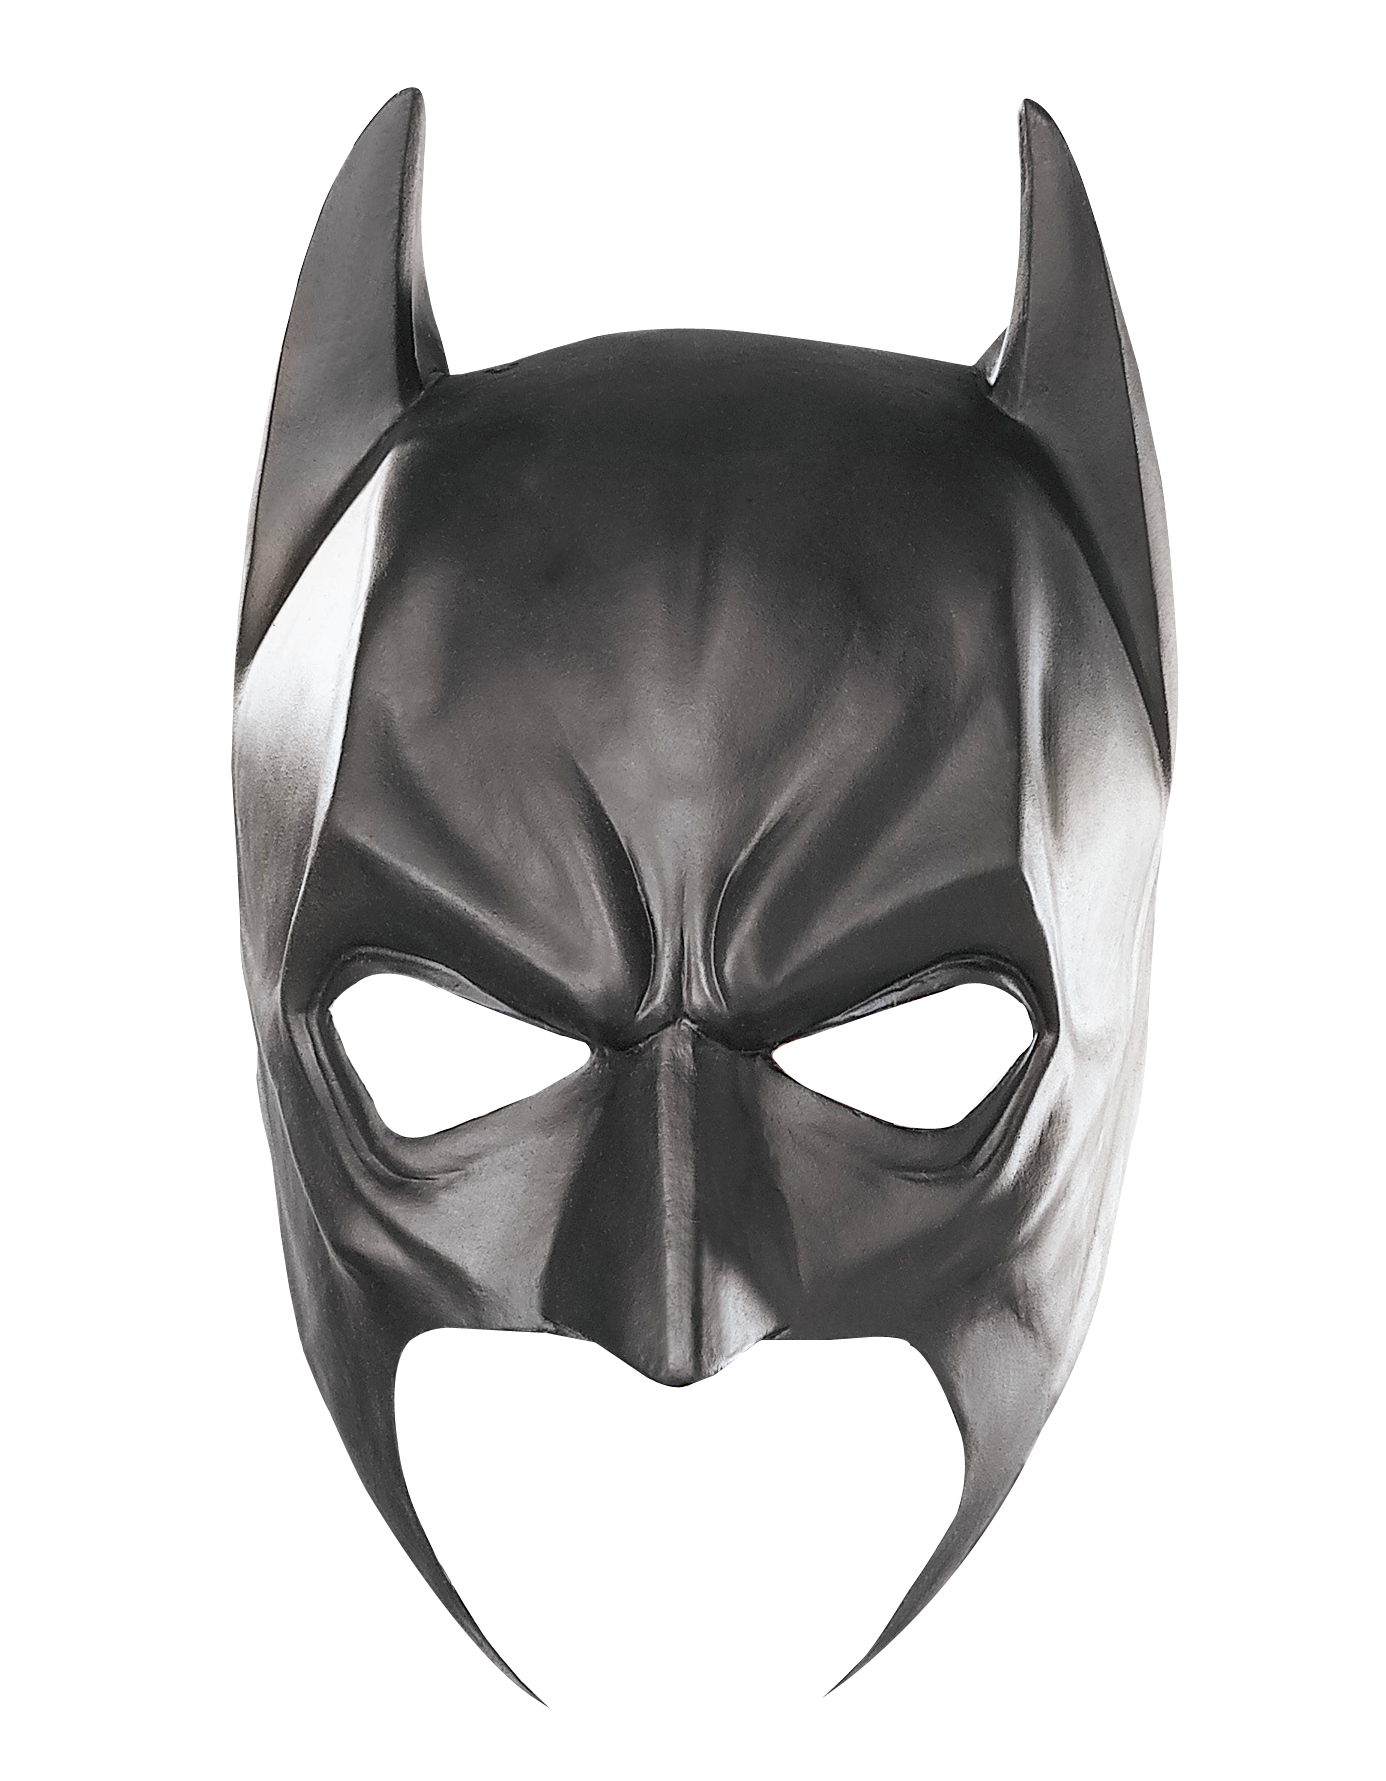 Batman Mask Png Transparent Image - Batman, Transparent background PNG HD thumbnail